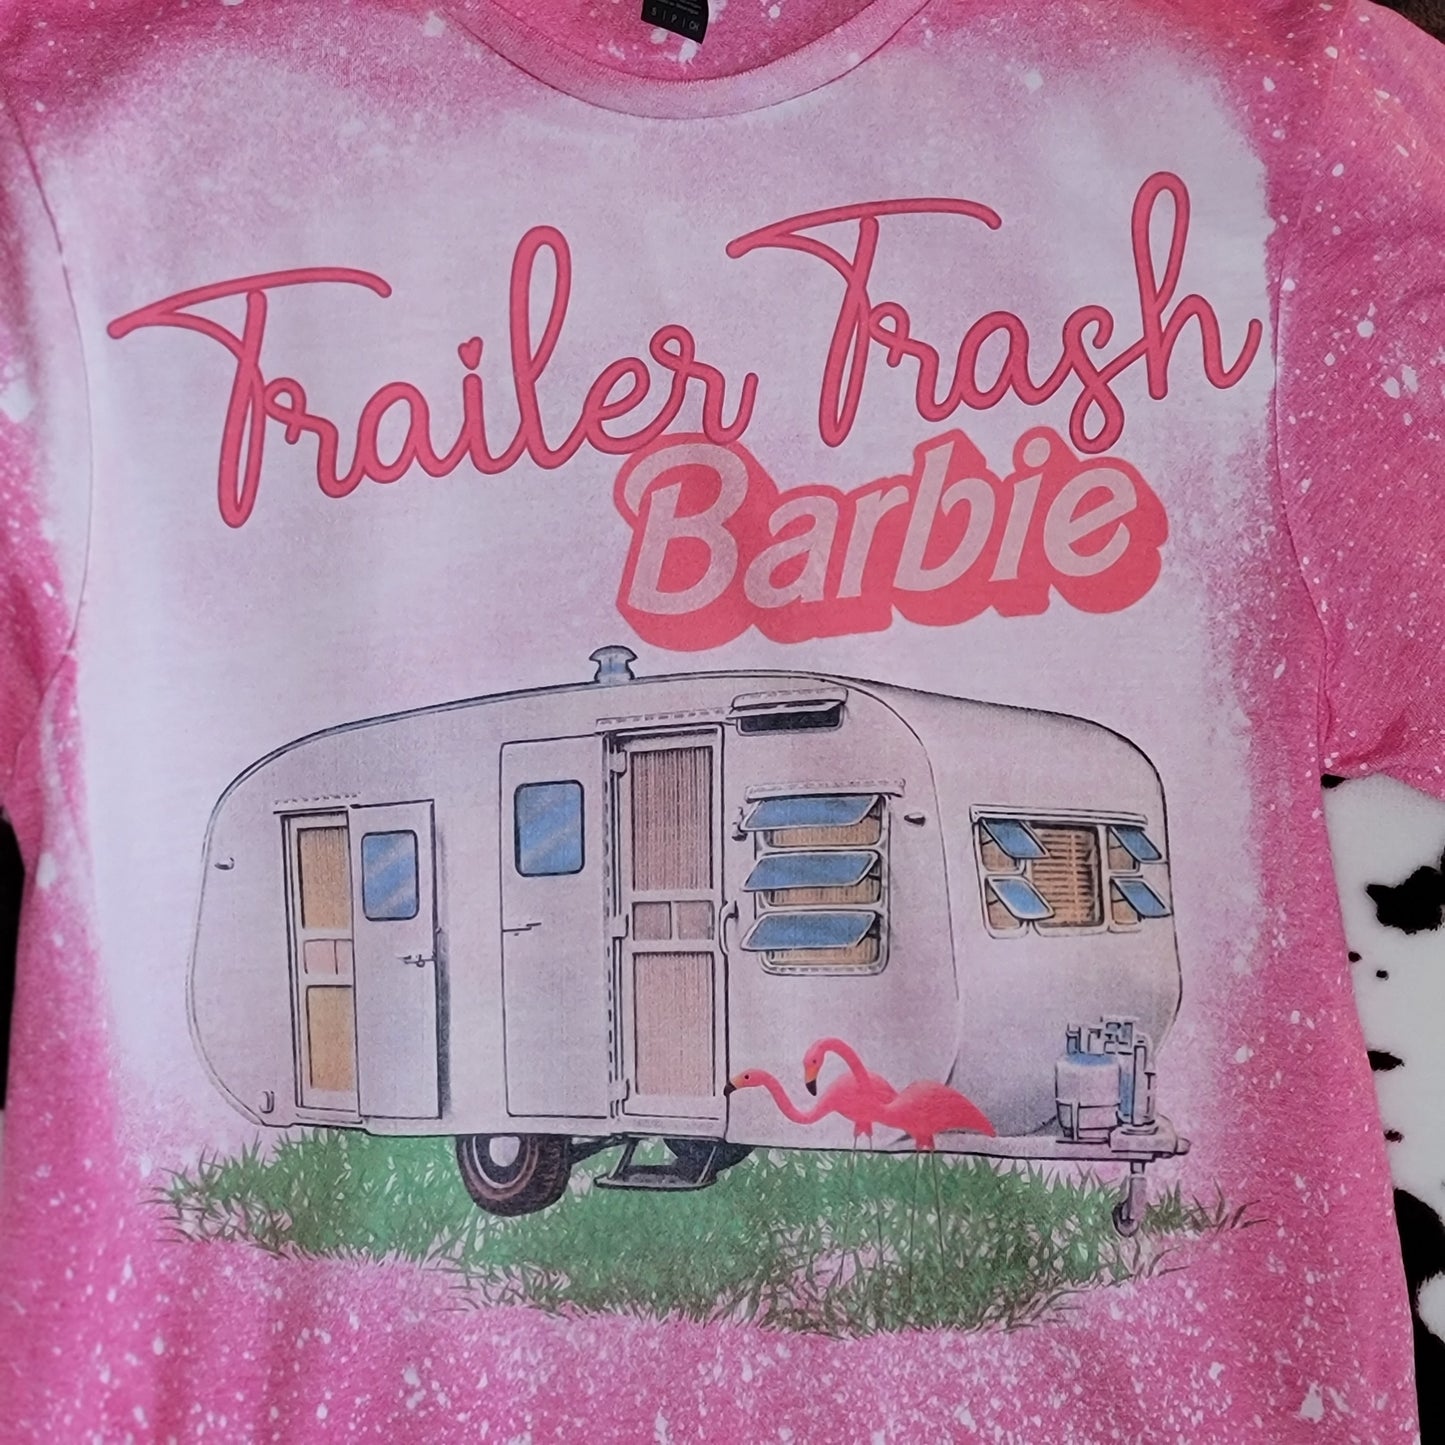 Trailer Trash Barbie Pink Bleached Short Sleeve T-Shirt